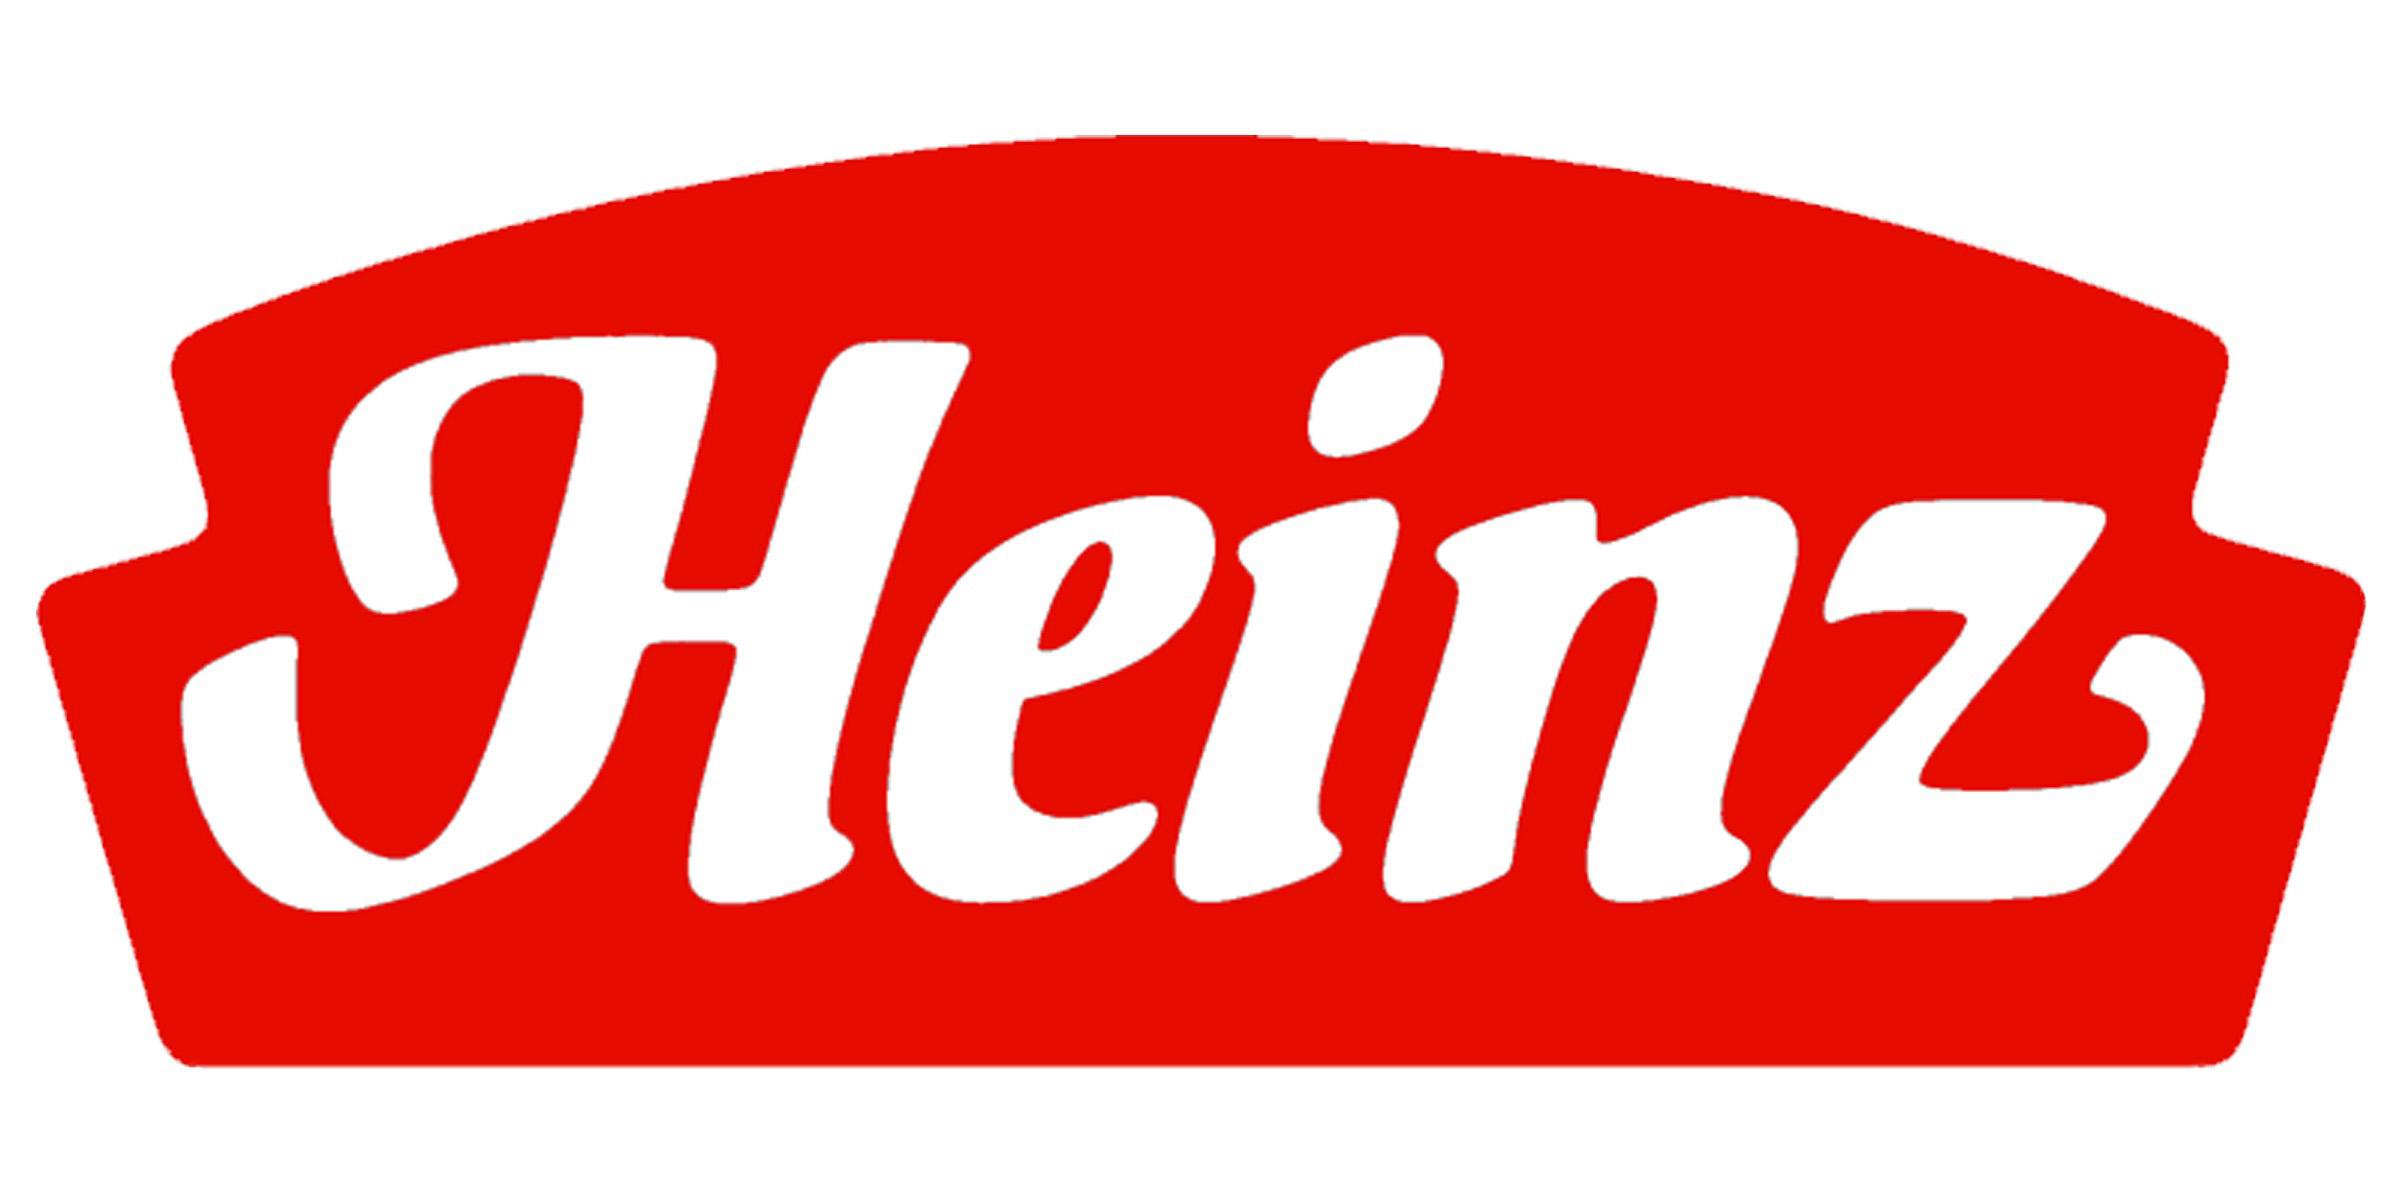 Share 105+ heinz logo latest